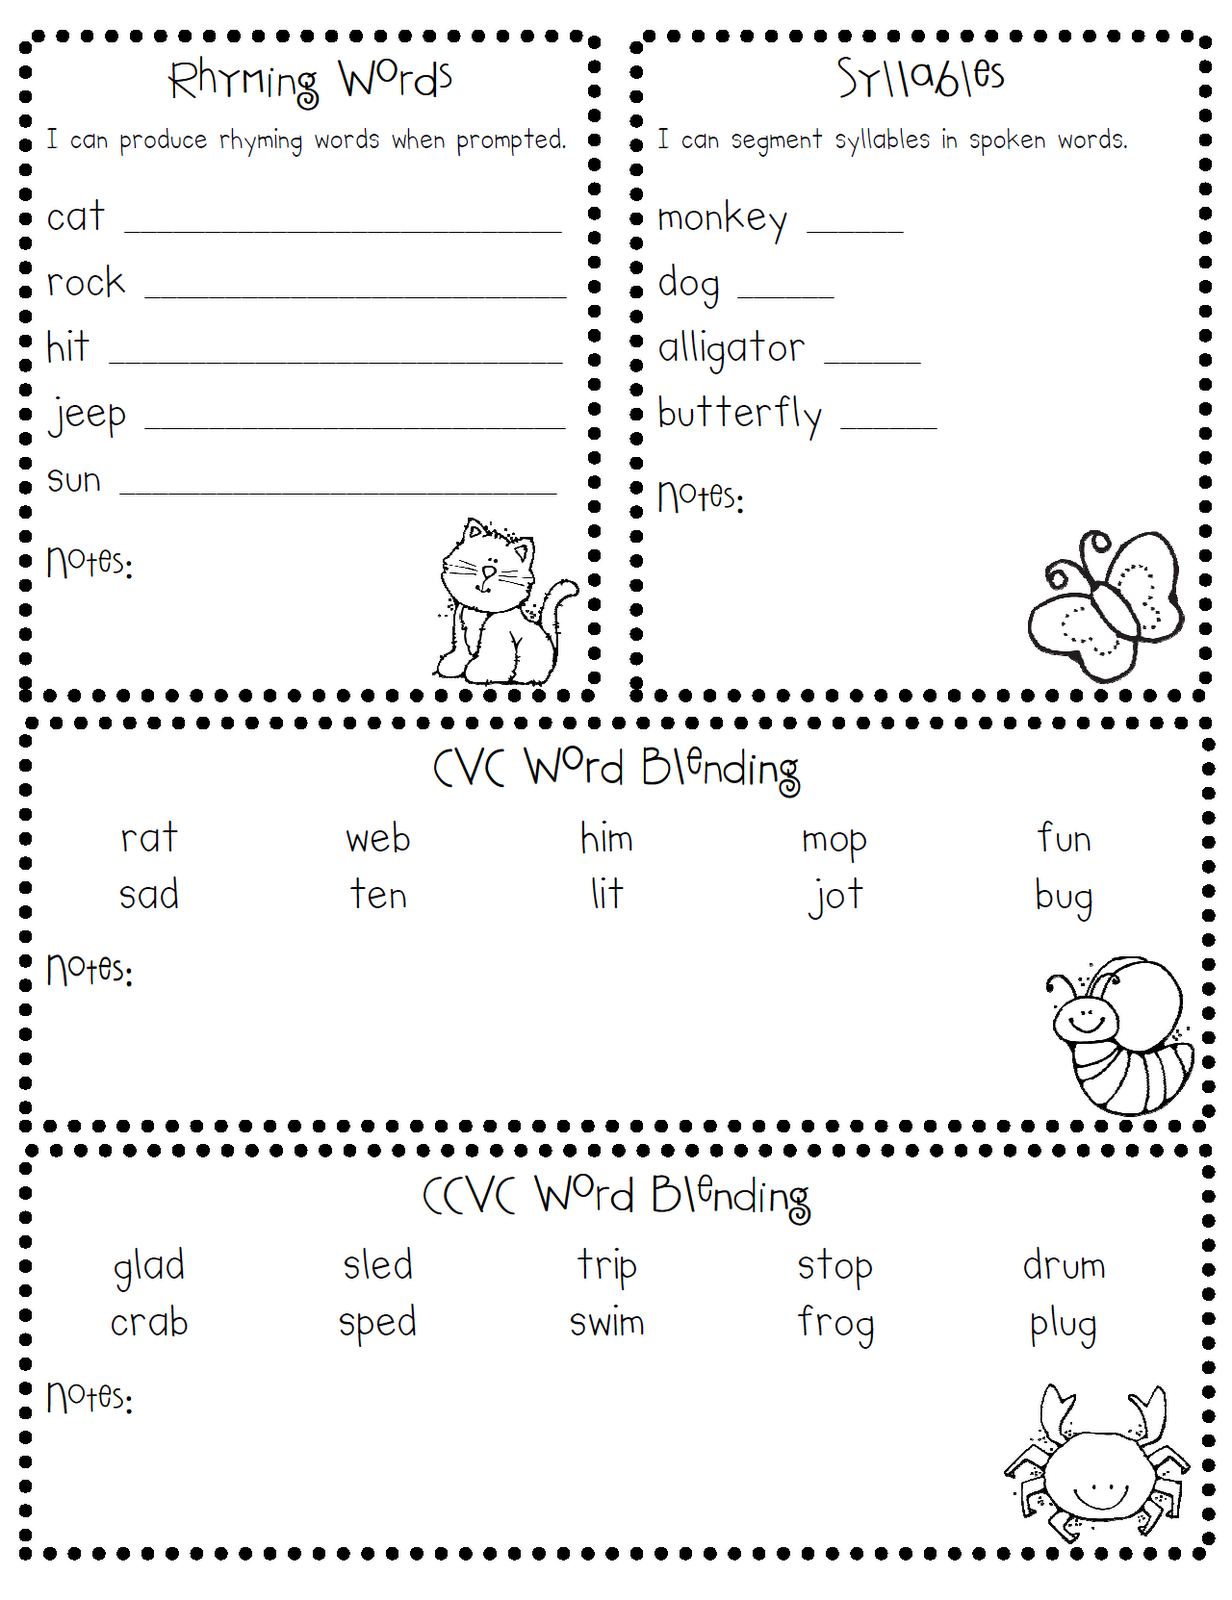 Carrillo s Kinder garden Kindergarten Assessment School Reading 